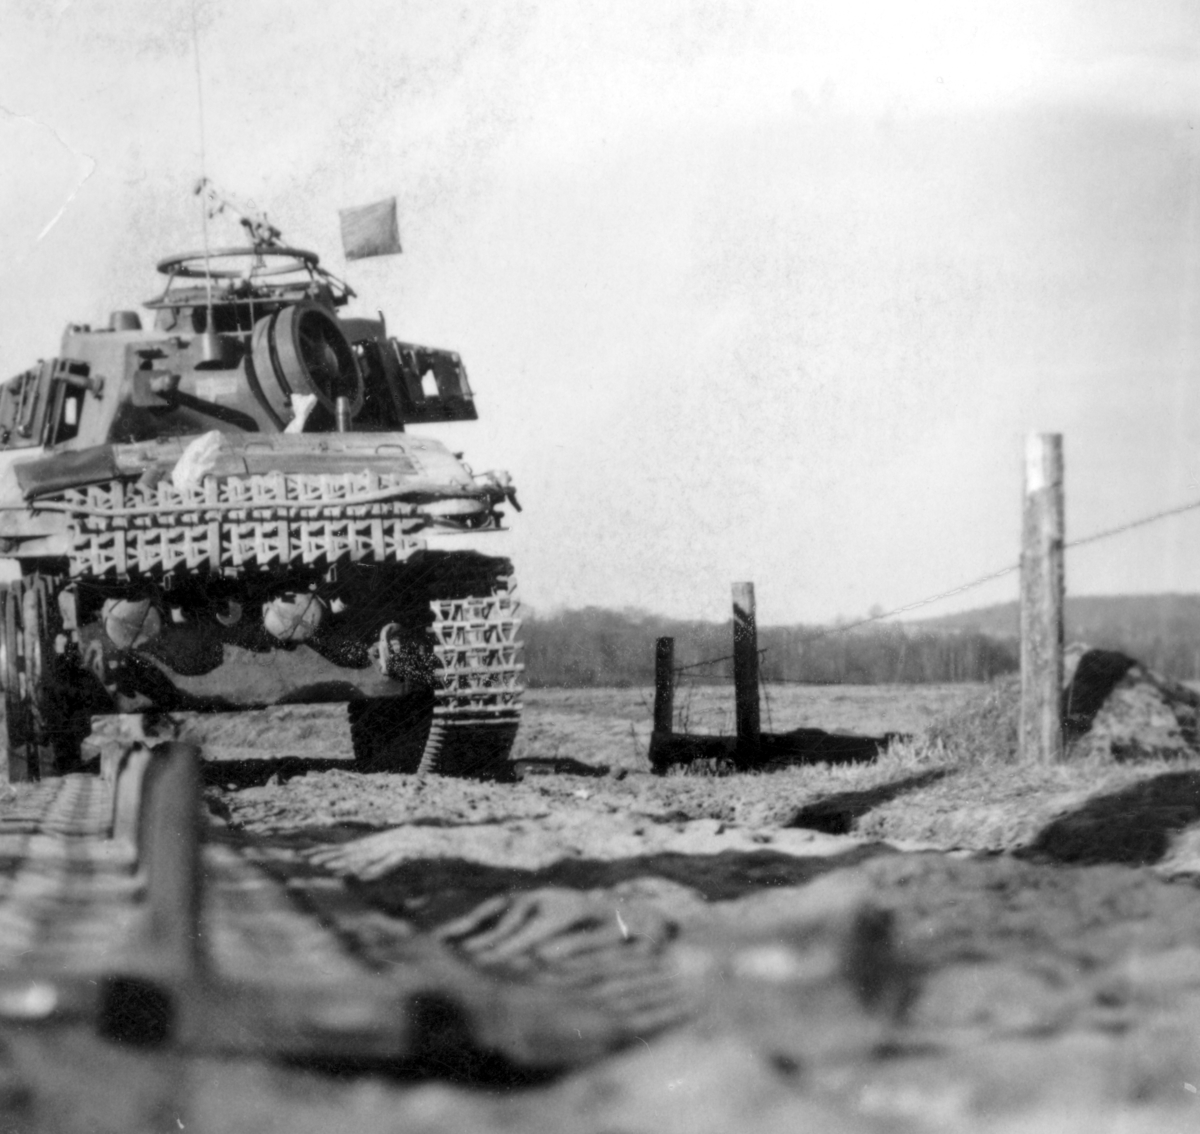 Bandkrängning på en stridsvagn m/42.

Milregnr: 672